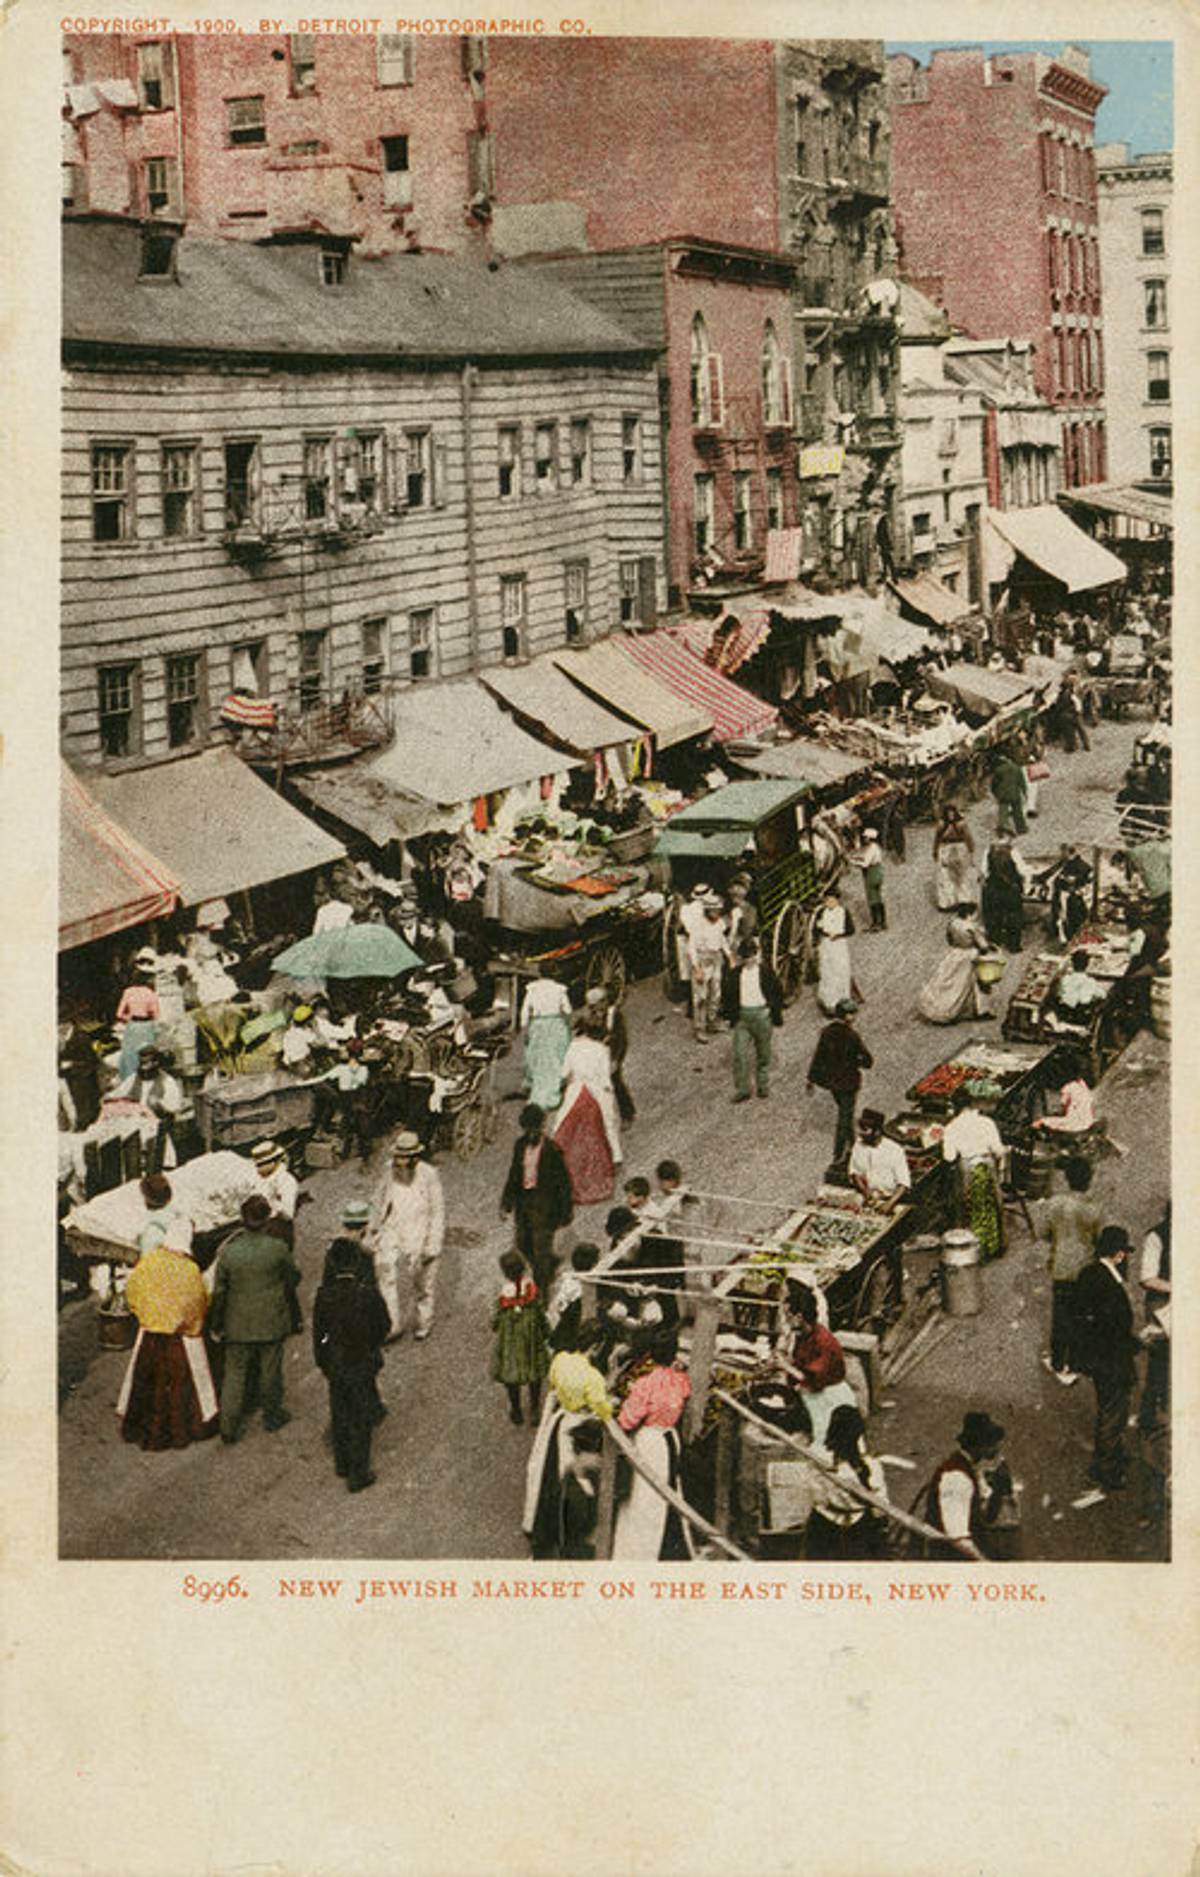 “New Jewish Market” on the Lower East Side. (Image courtesy of the Blavatnik Archive Foundation)